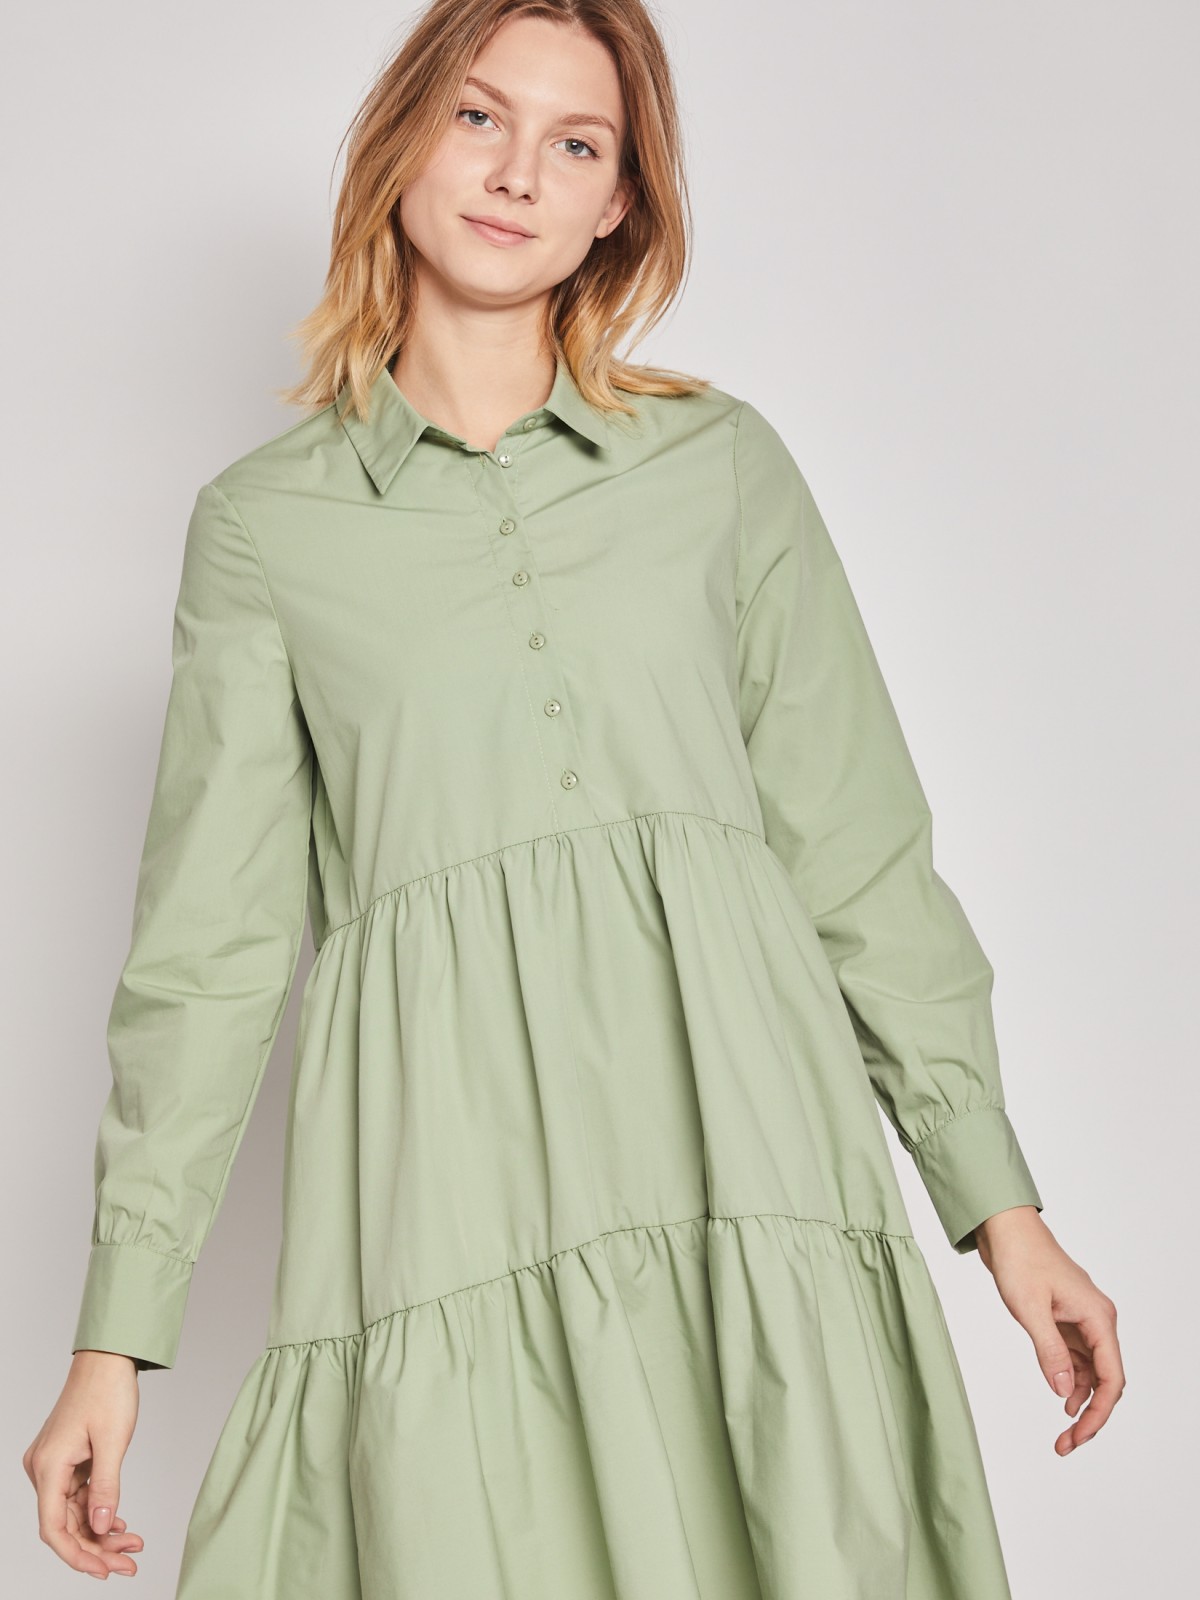 Ярусное платье-рубашка zolla 022138291223, цвет светло-зеленый, размер XS - фото 2